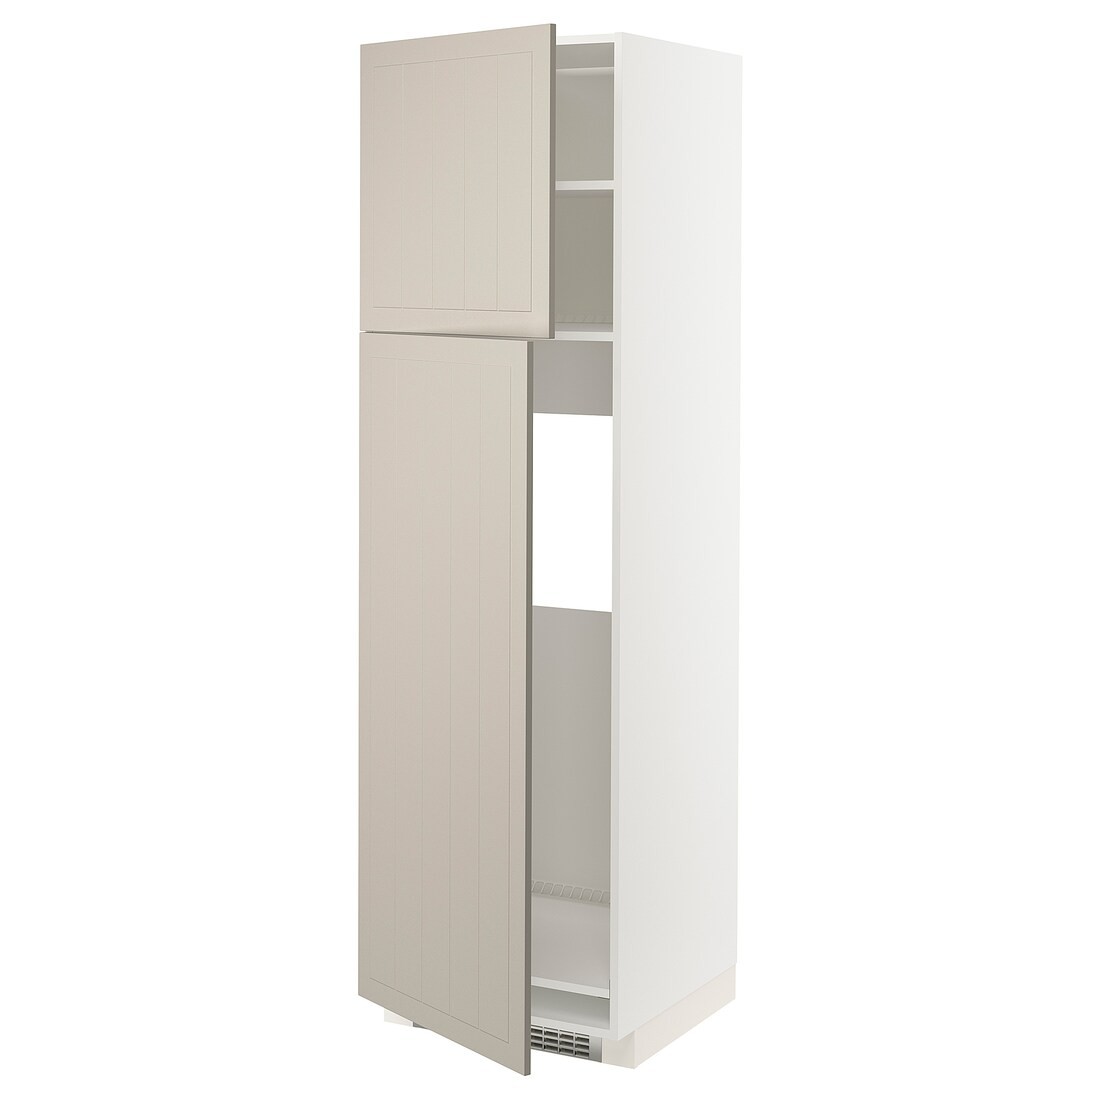 IKEA METOD МЕТОД Высокий шкаф для холодильника, белый / Stensund бежевый, 60x60x200 см 39461509 | 394.615.09